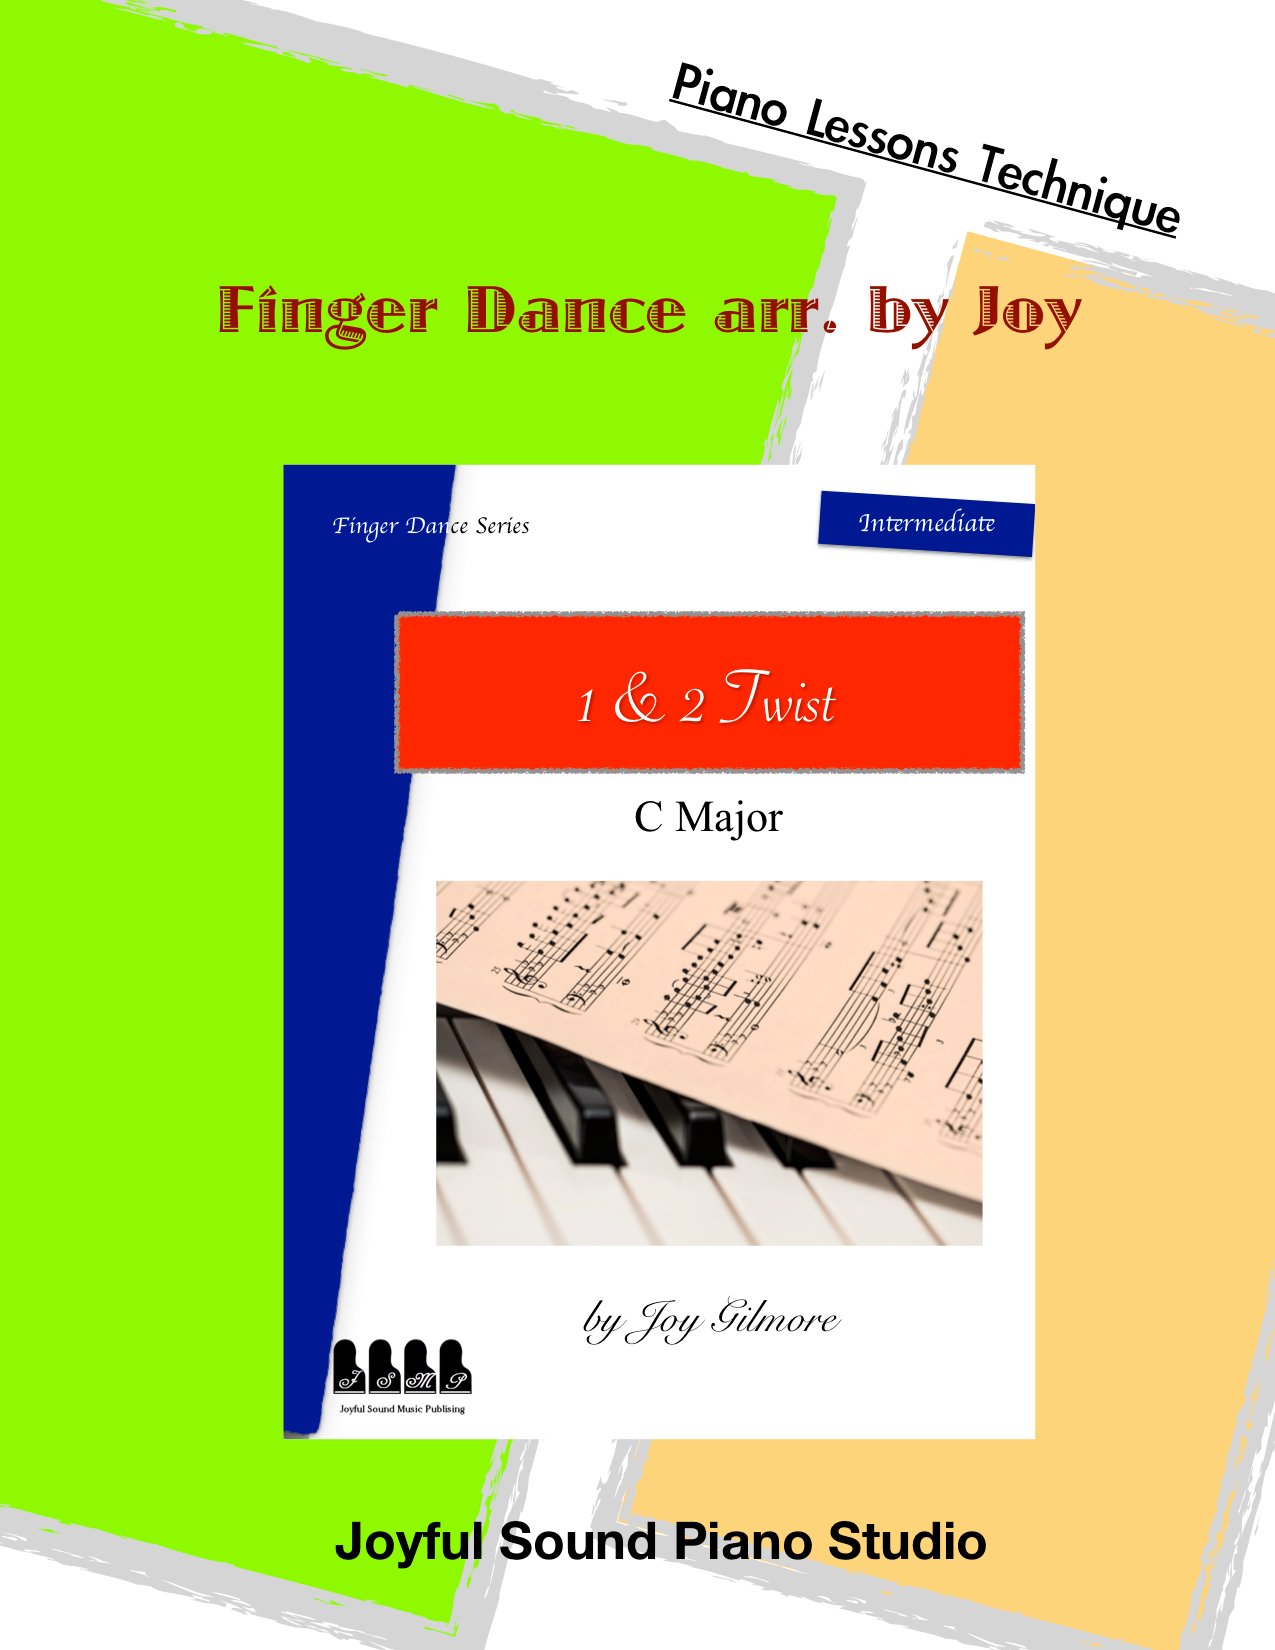 31_Lessons activities_Finger Dance